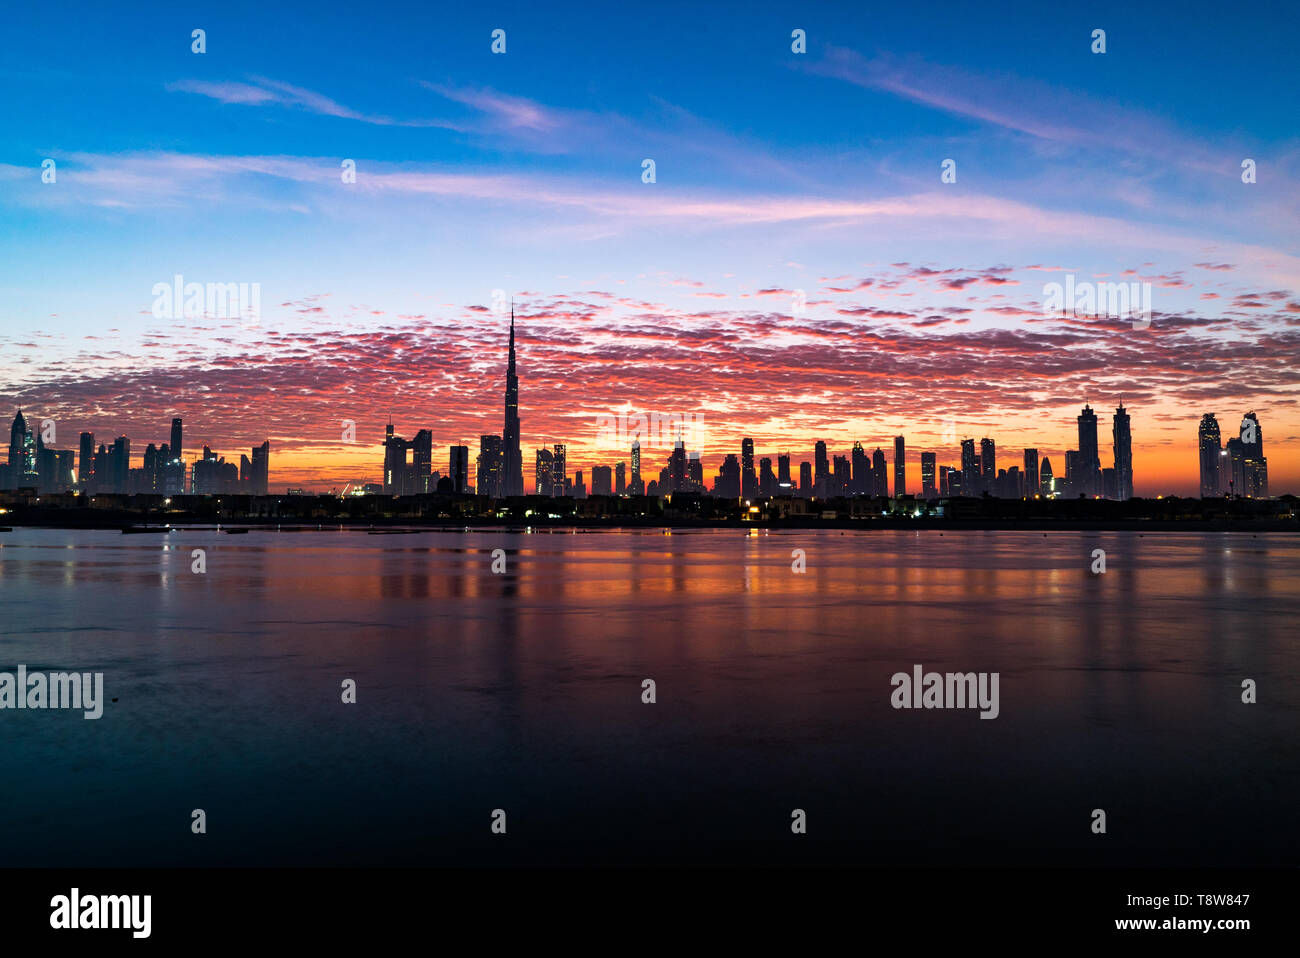 Morning or sunrise, dawn in Dubai. Beautiful colored cloudy sky over downtown Dubai. Glow over skyscraper. Stock Photo